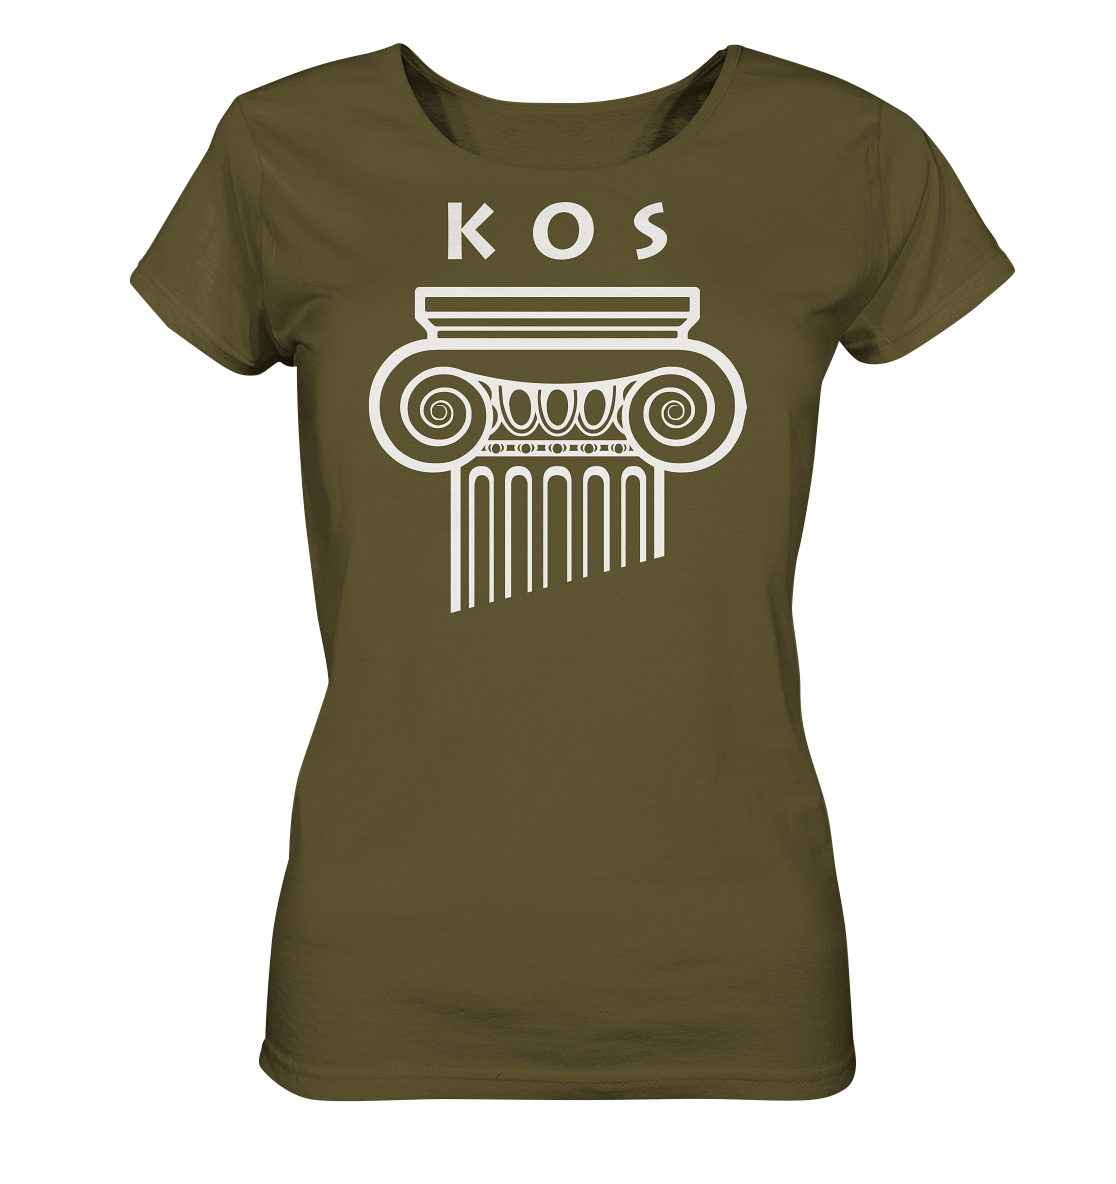 Kos Griechischer Säulenkopf - Ladies Organic Shirt